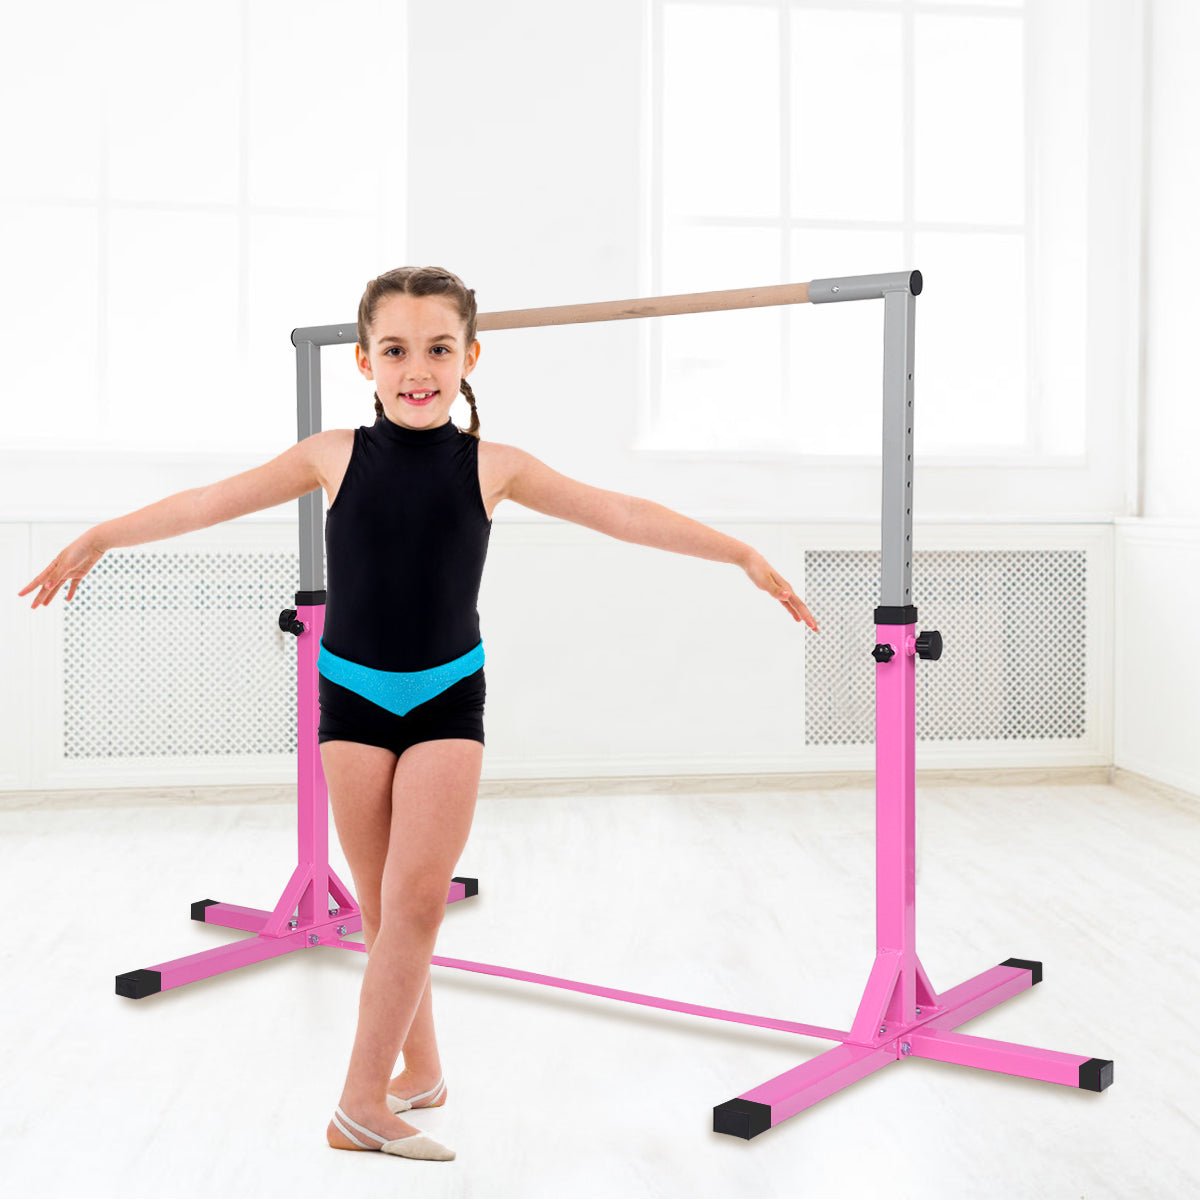 Enhance Gymnastics Skills with the Pink Training Bar